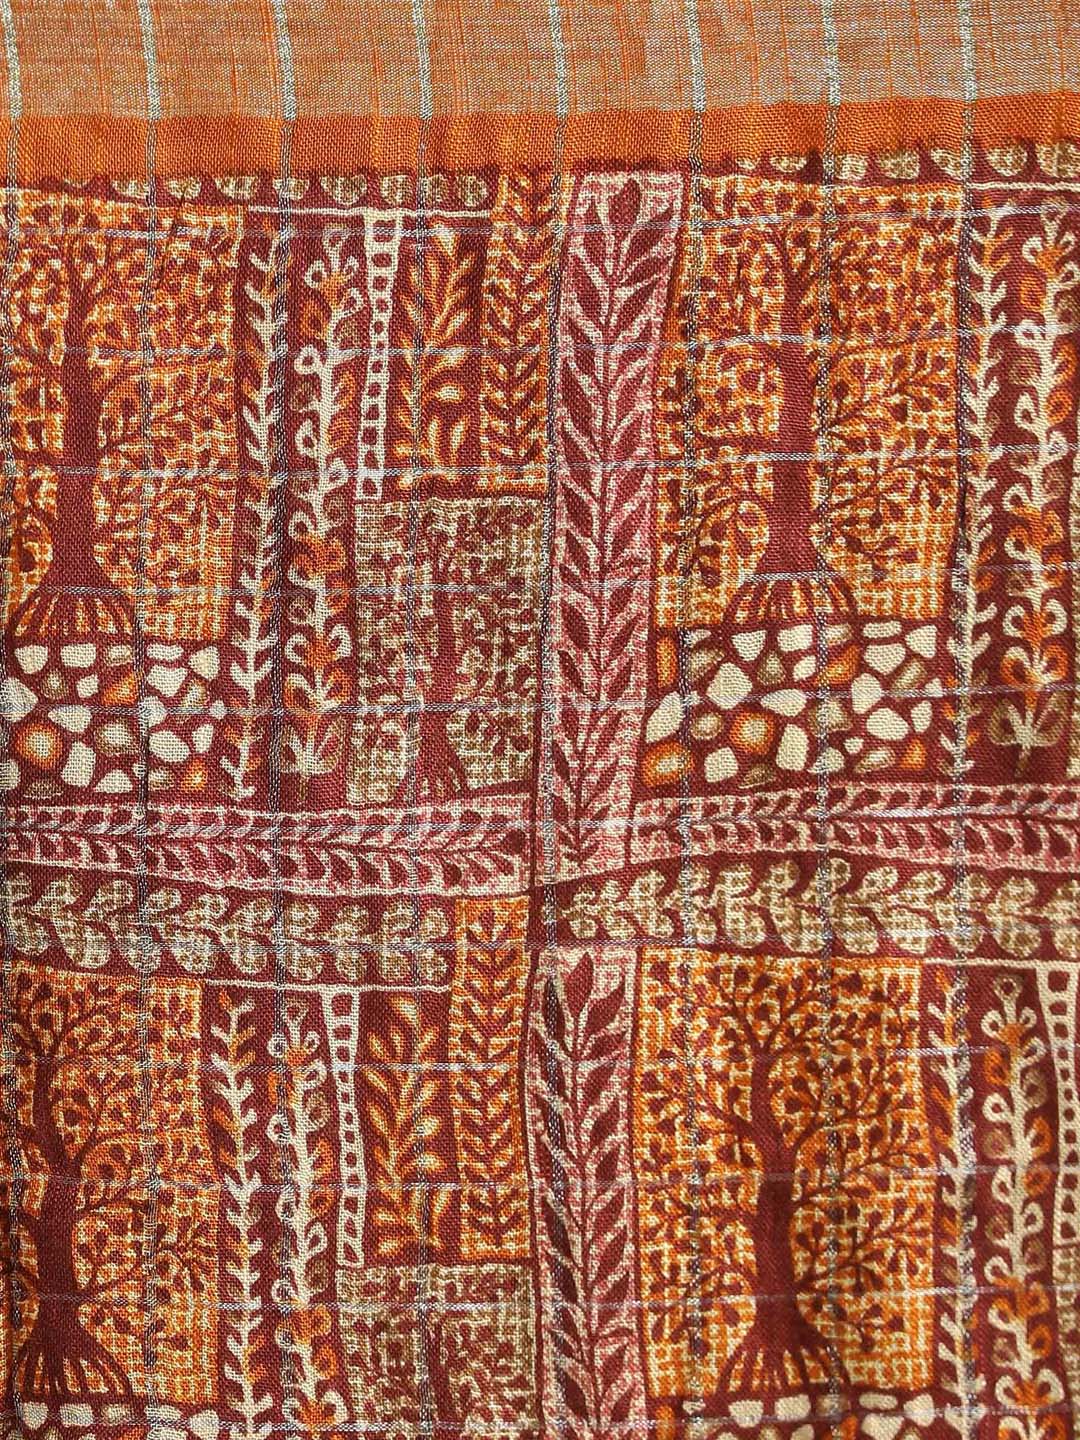 Indethnic Rust Liva Printed Saree - Saree Detail View